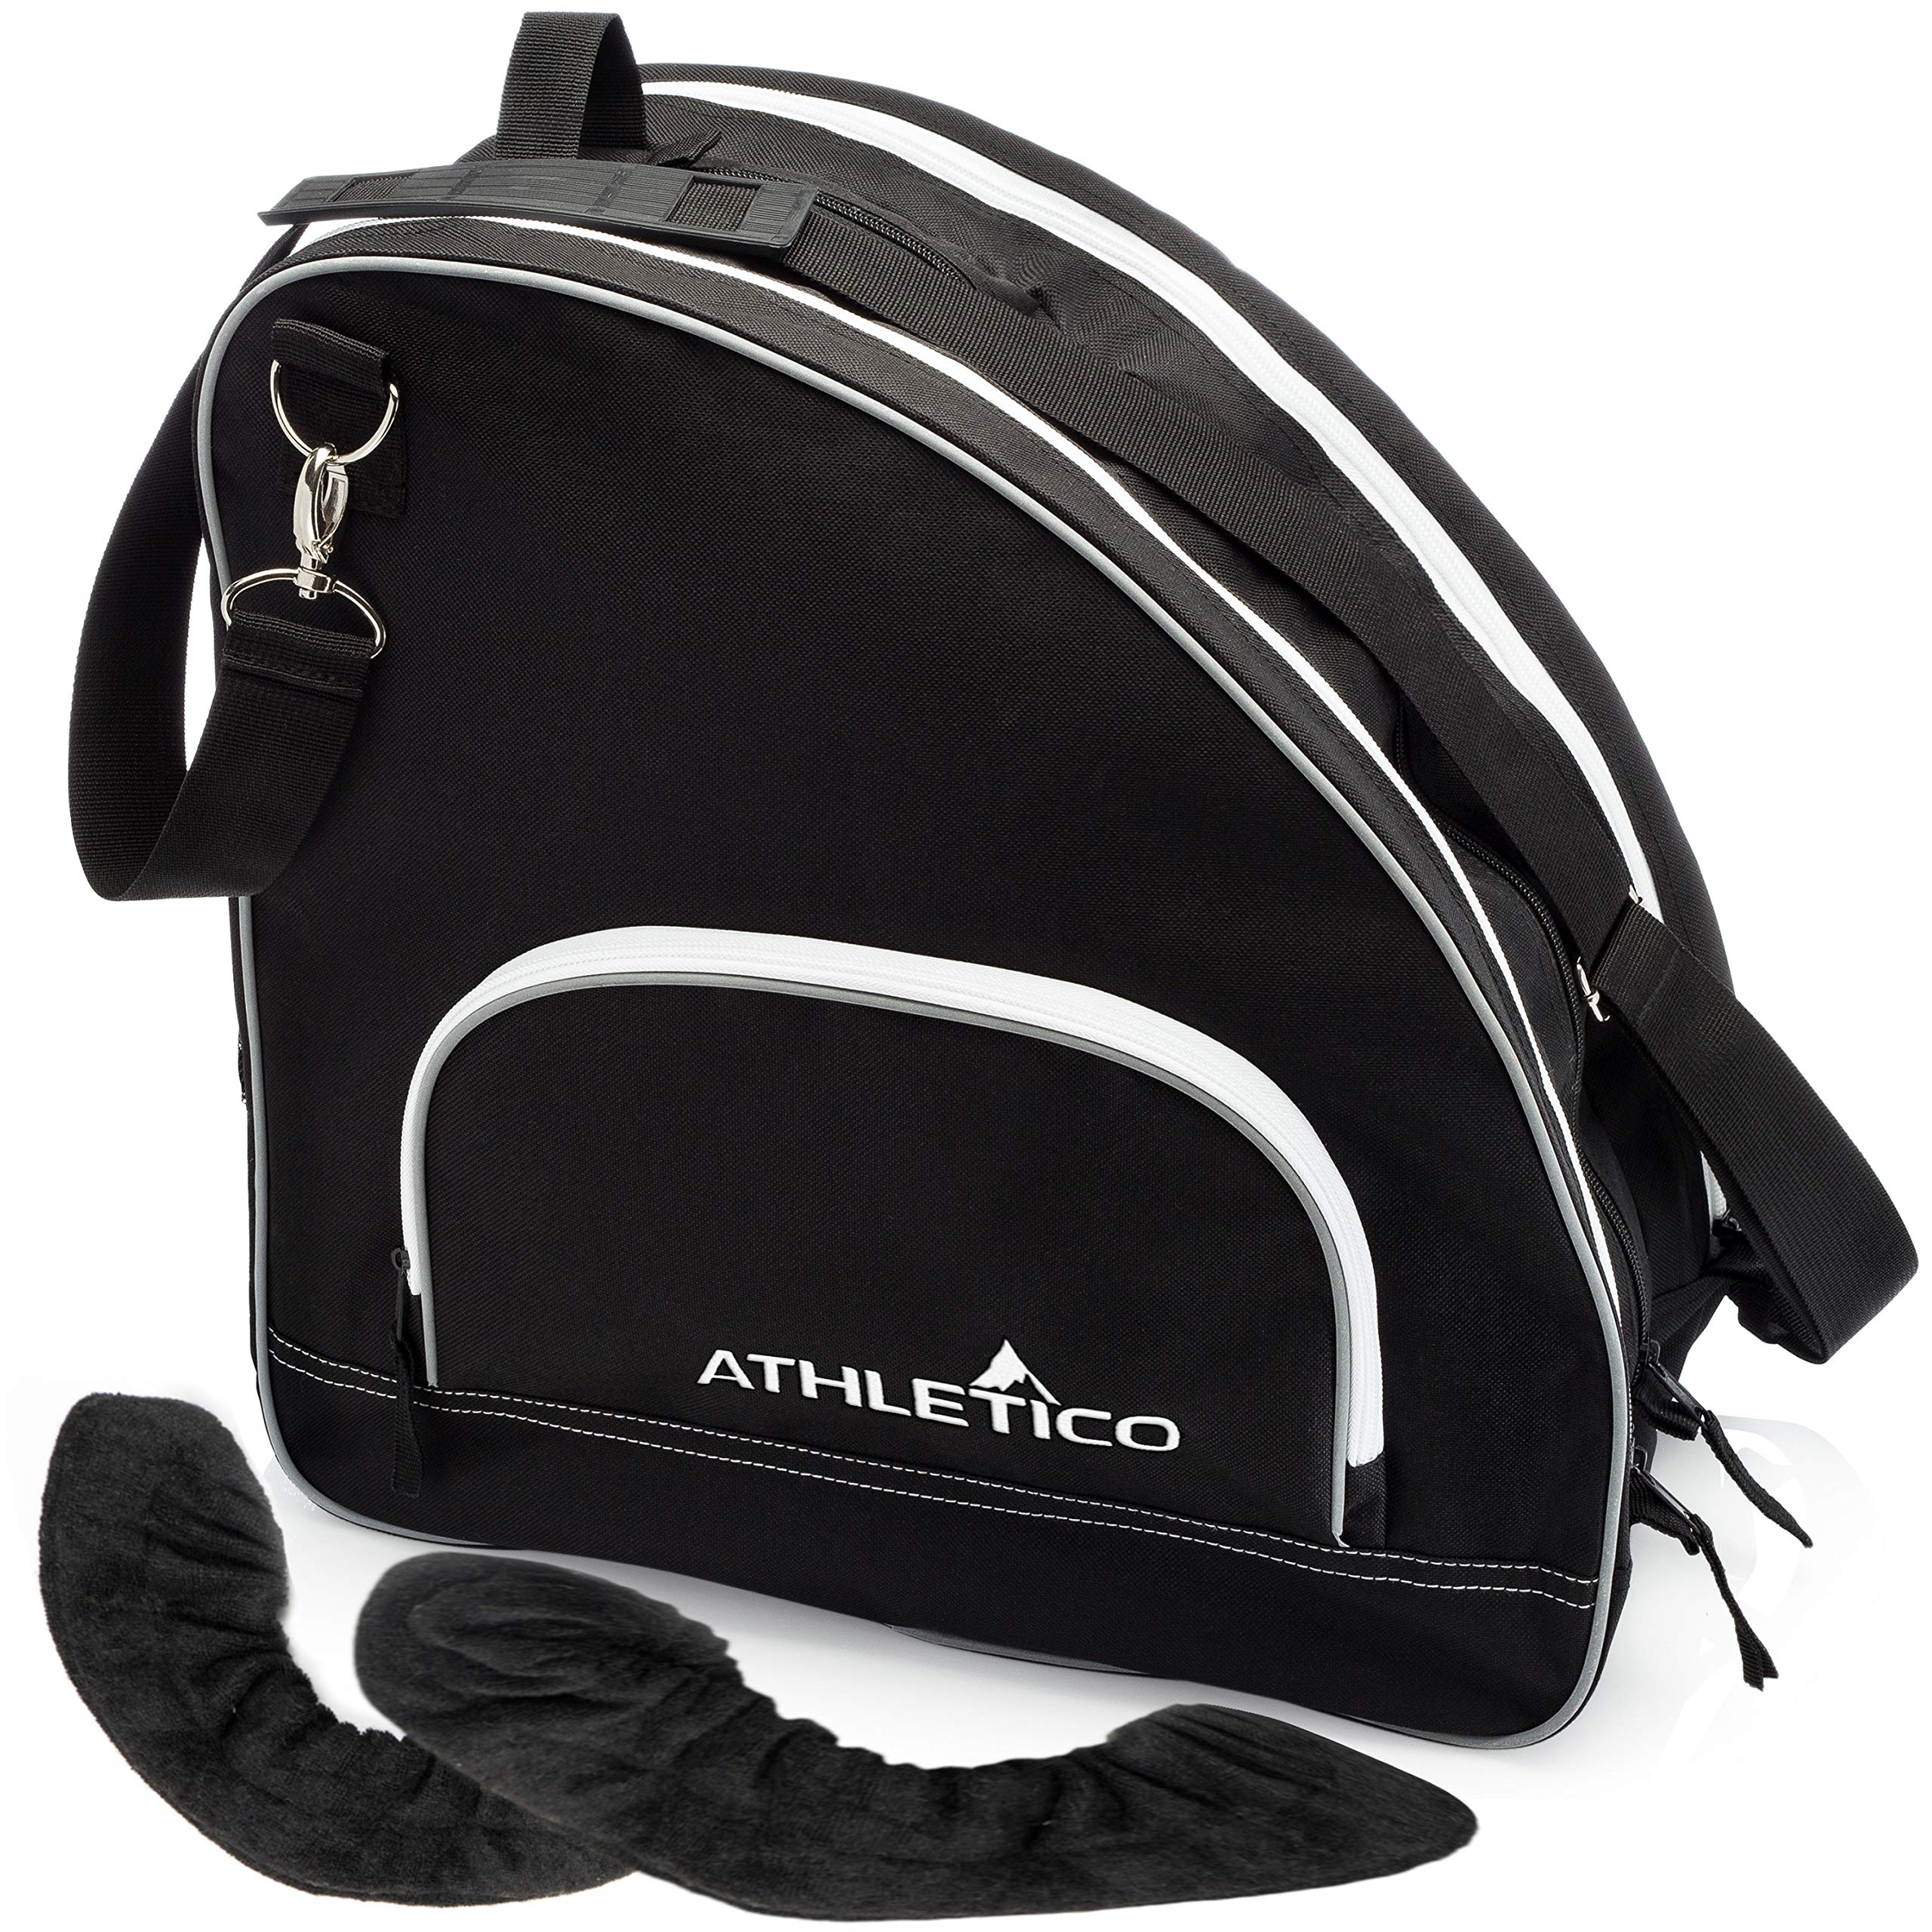 Athletico Skate Bag + Large Blade Cover (Black)  - Good